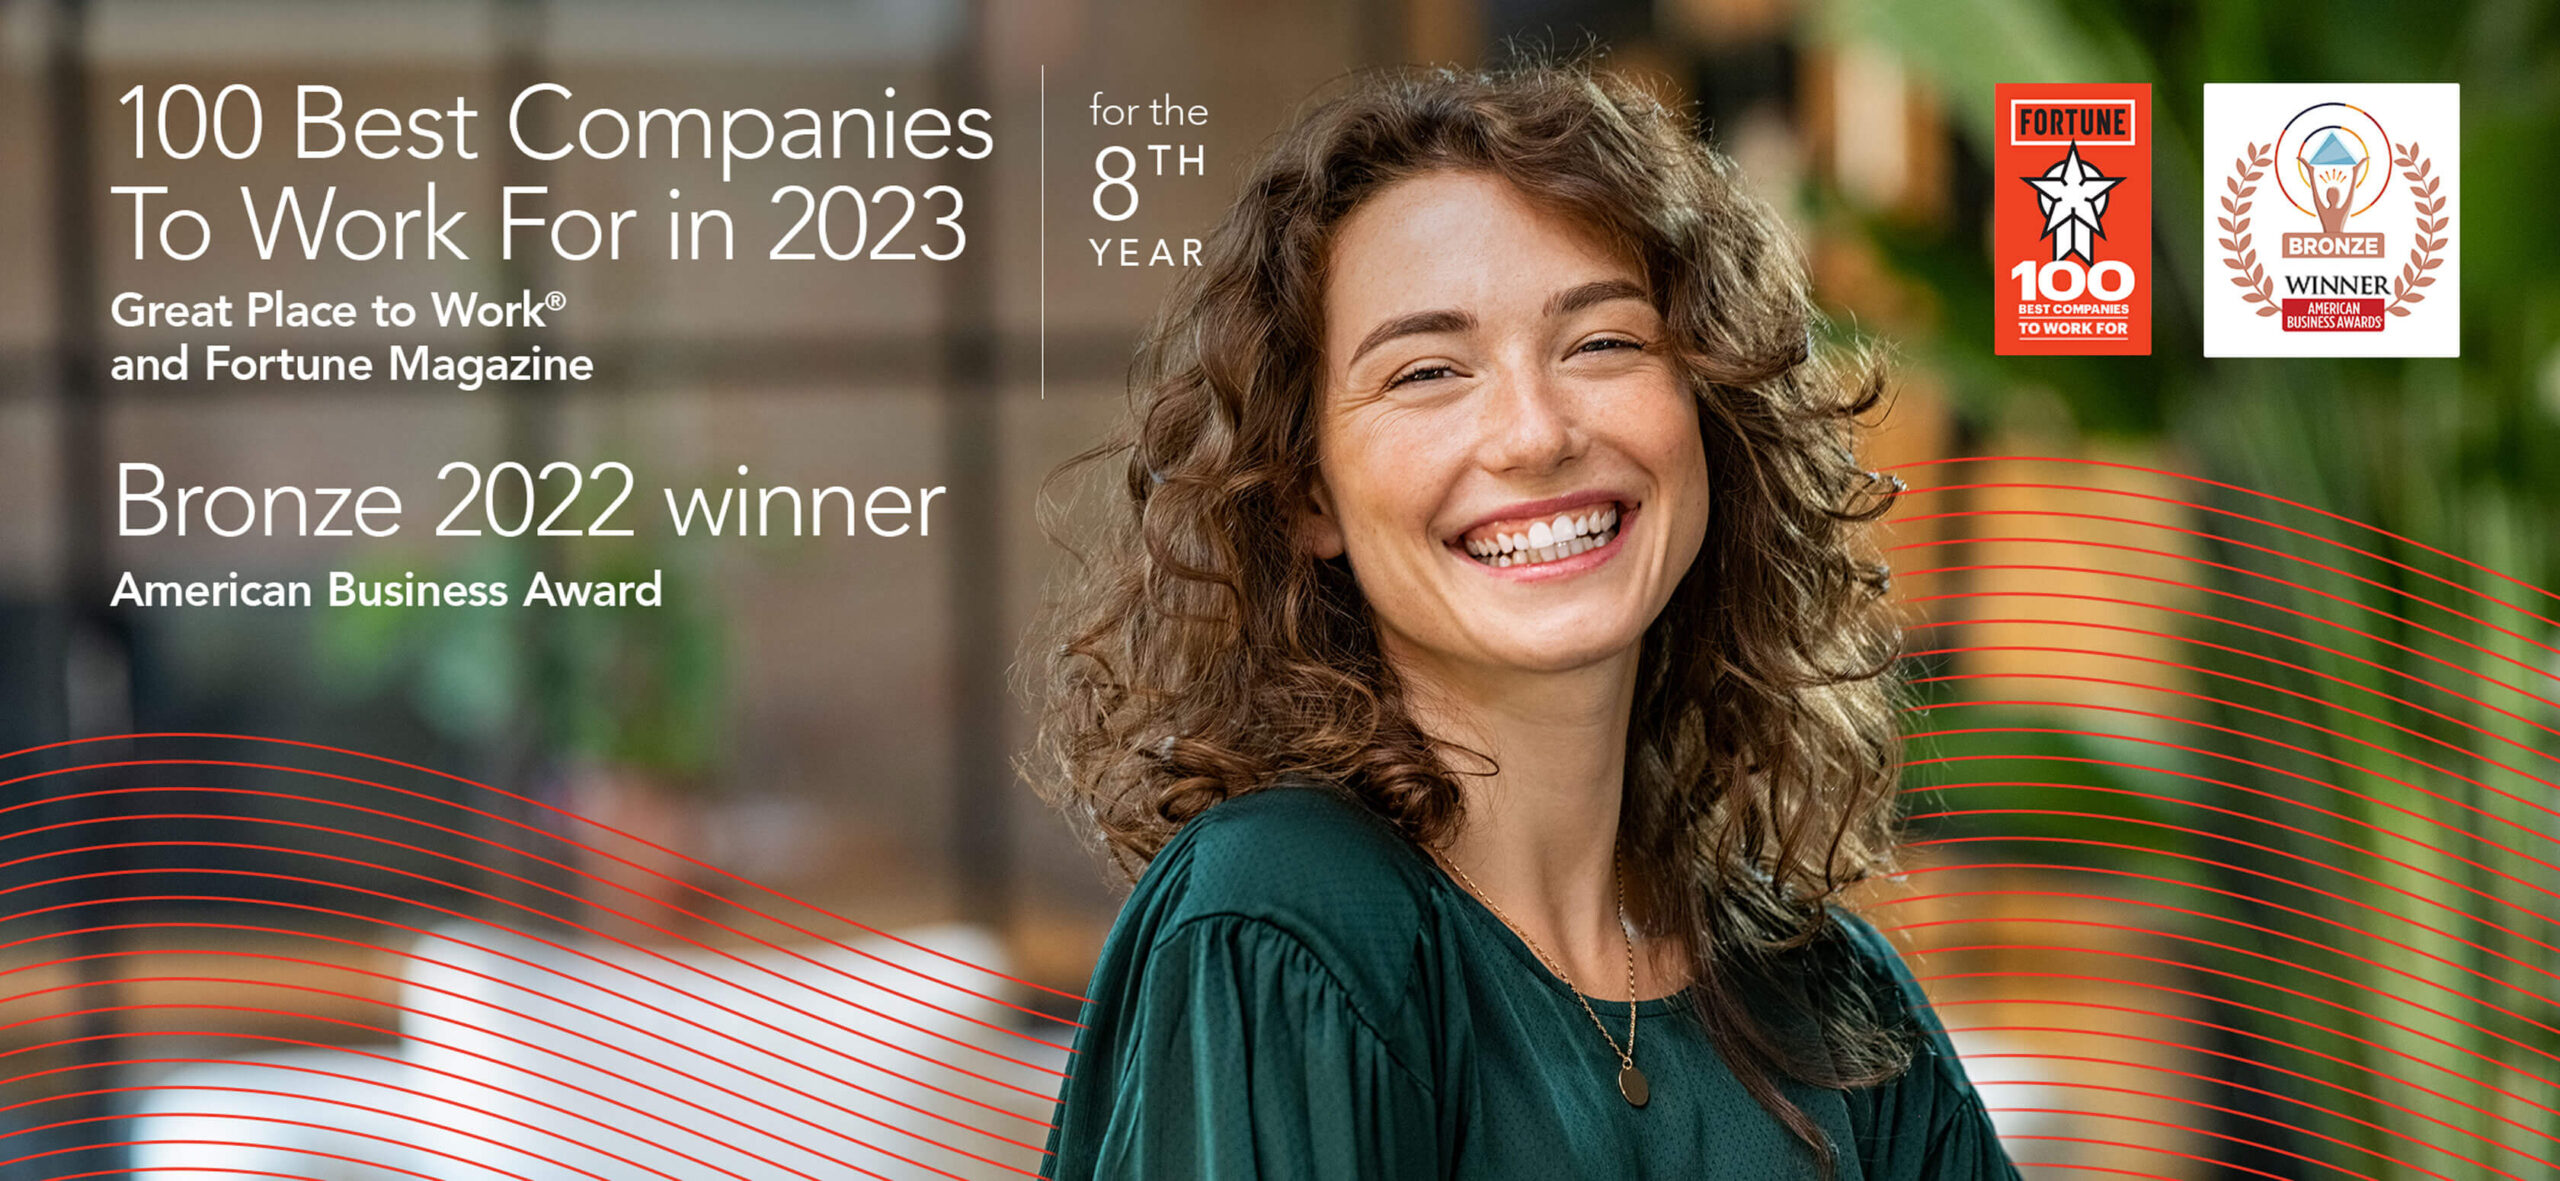 Bronze Winner in Fortune Magazine's 100 Best Companies to Work For in 2023